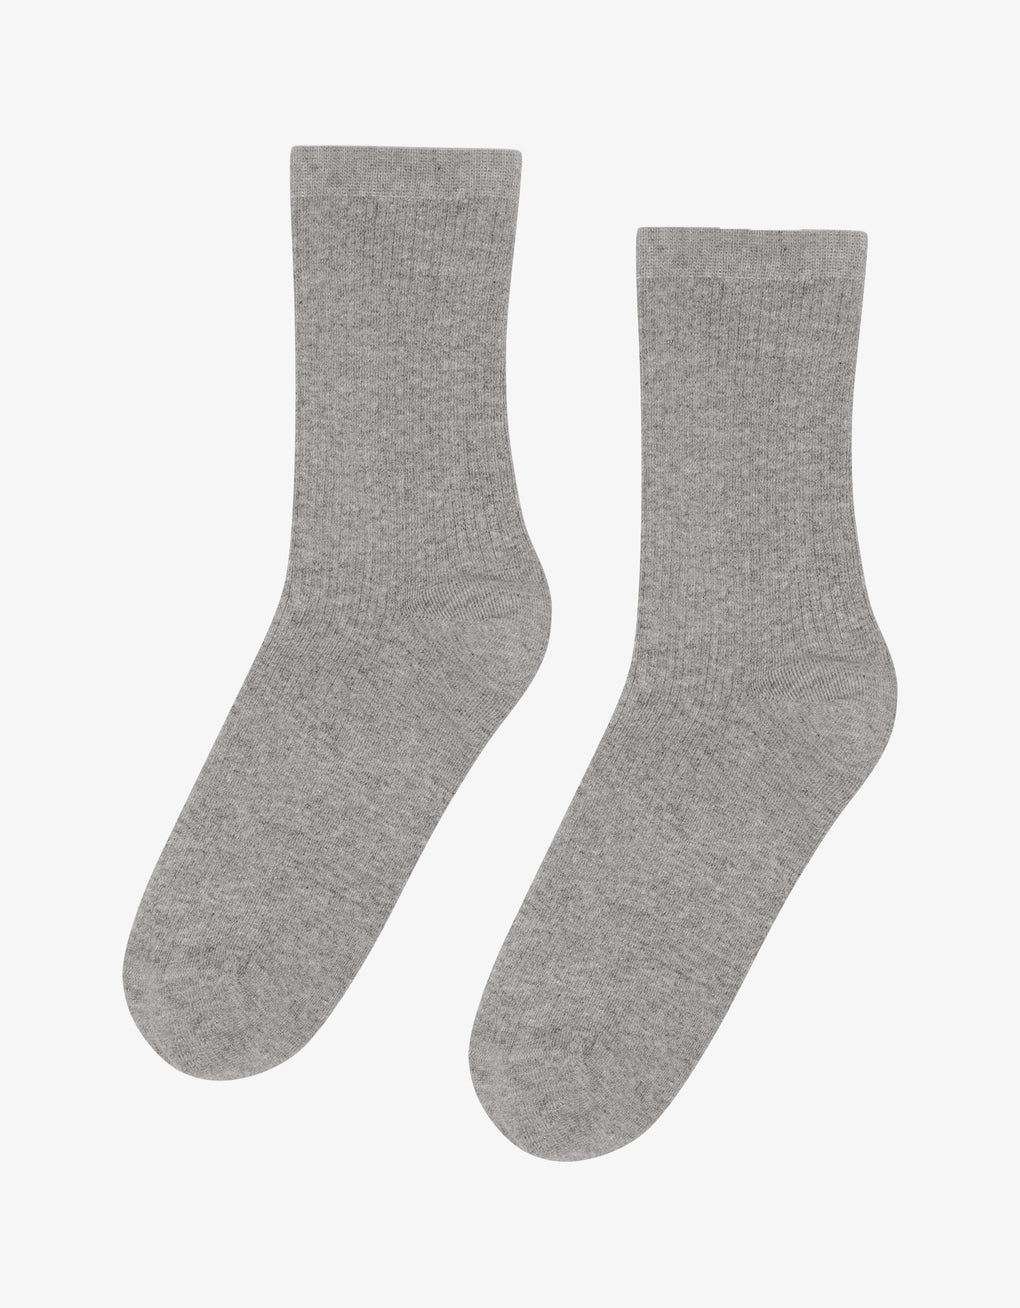 Organic Socks - Heather Grey